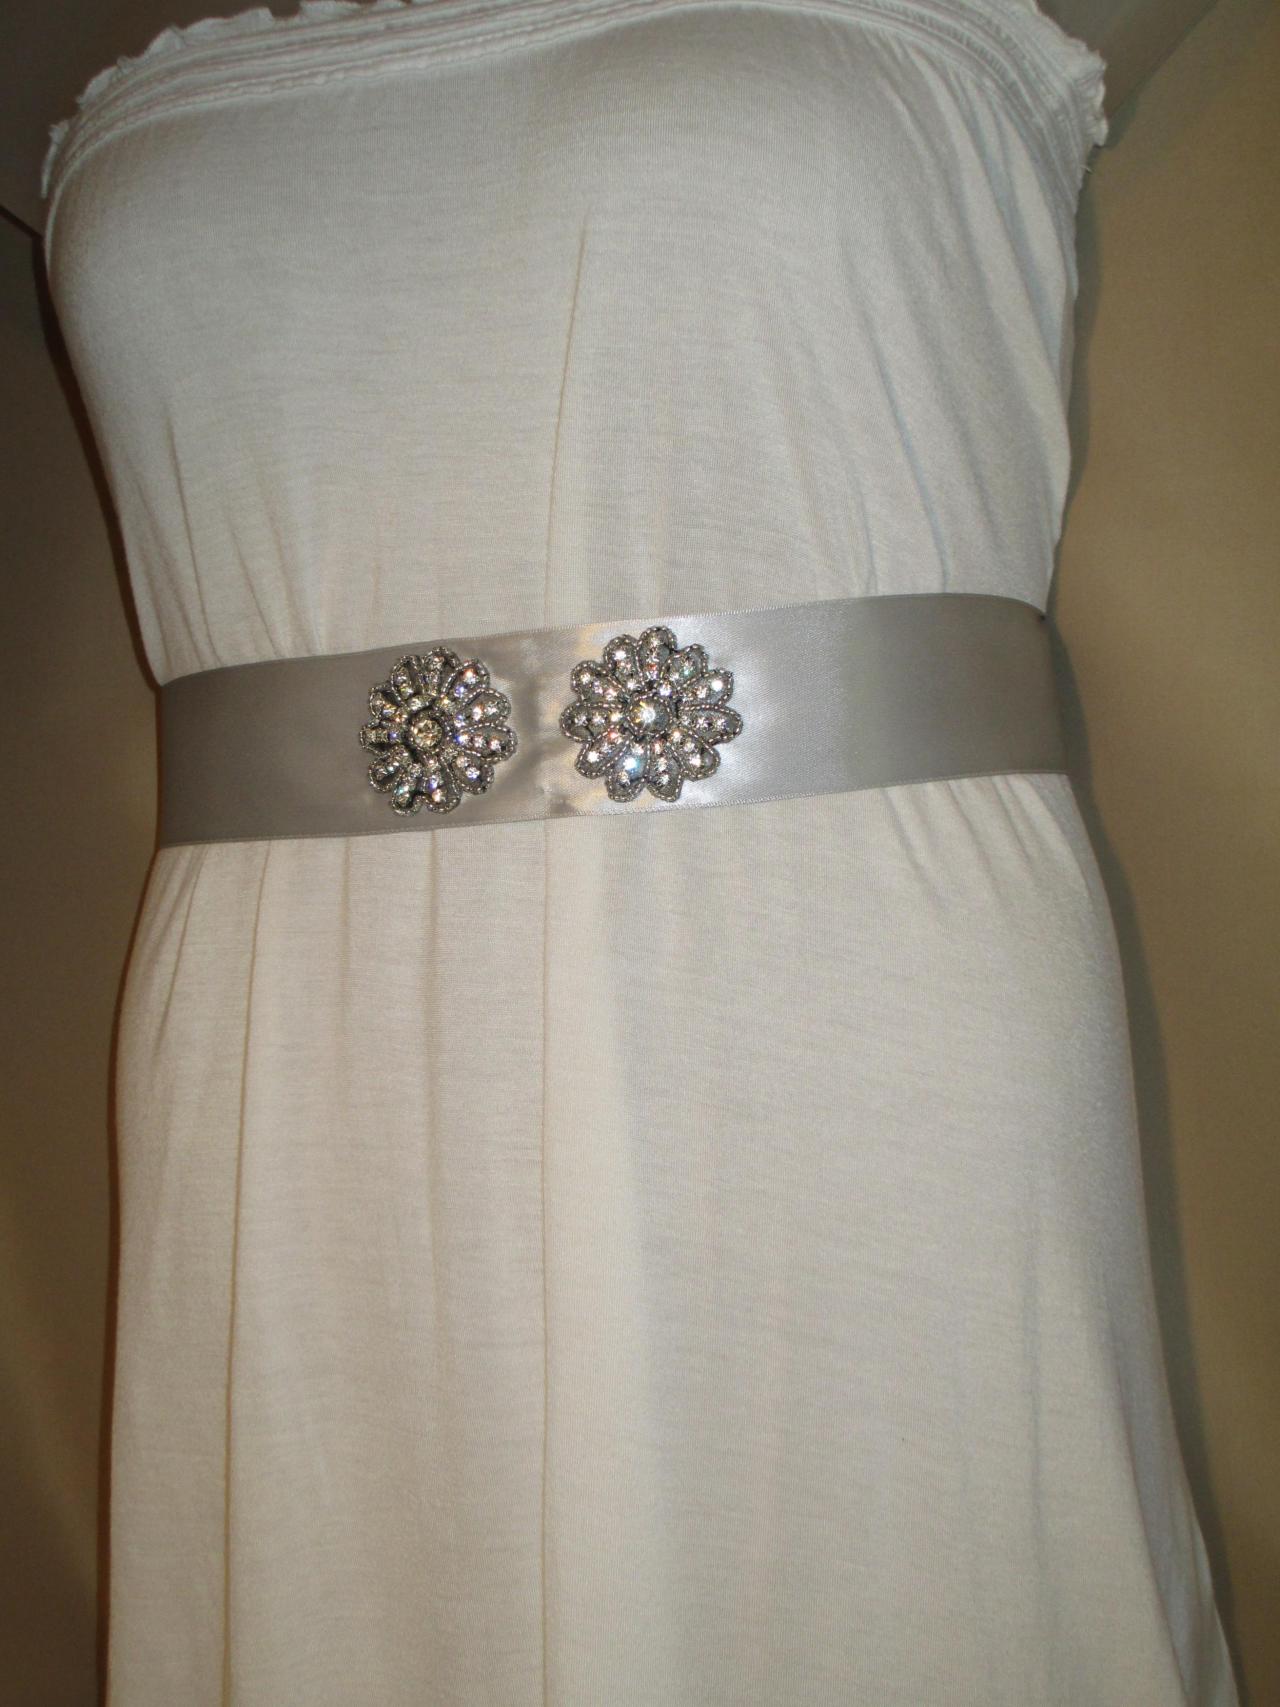 Bridal Sash - Wedding Sash - Gray/silver Ribbon - Dress Sash - Rhinestone Applique Embellishment - Handmade In Colorado